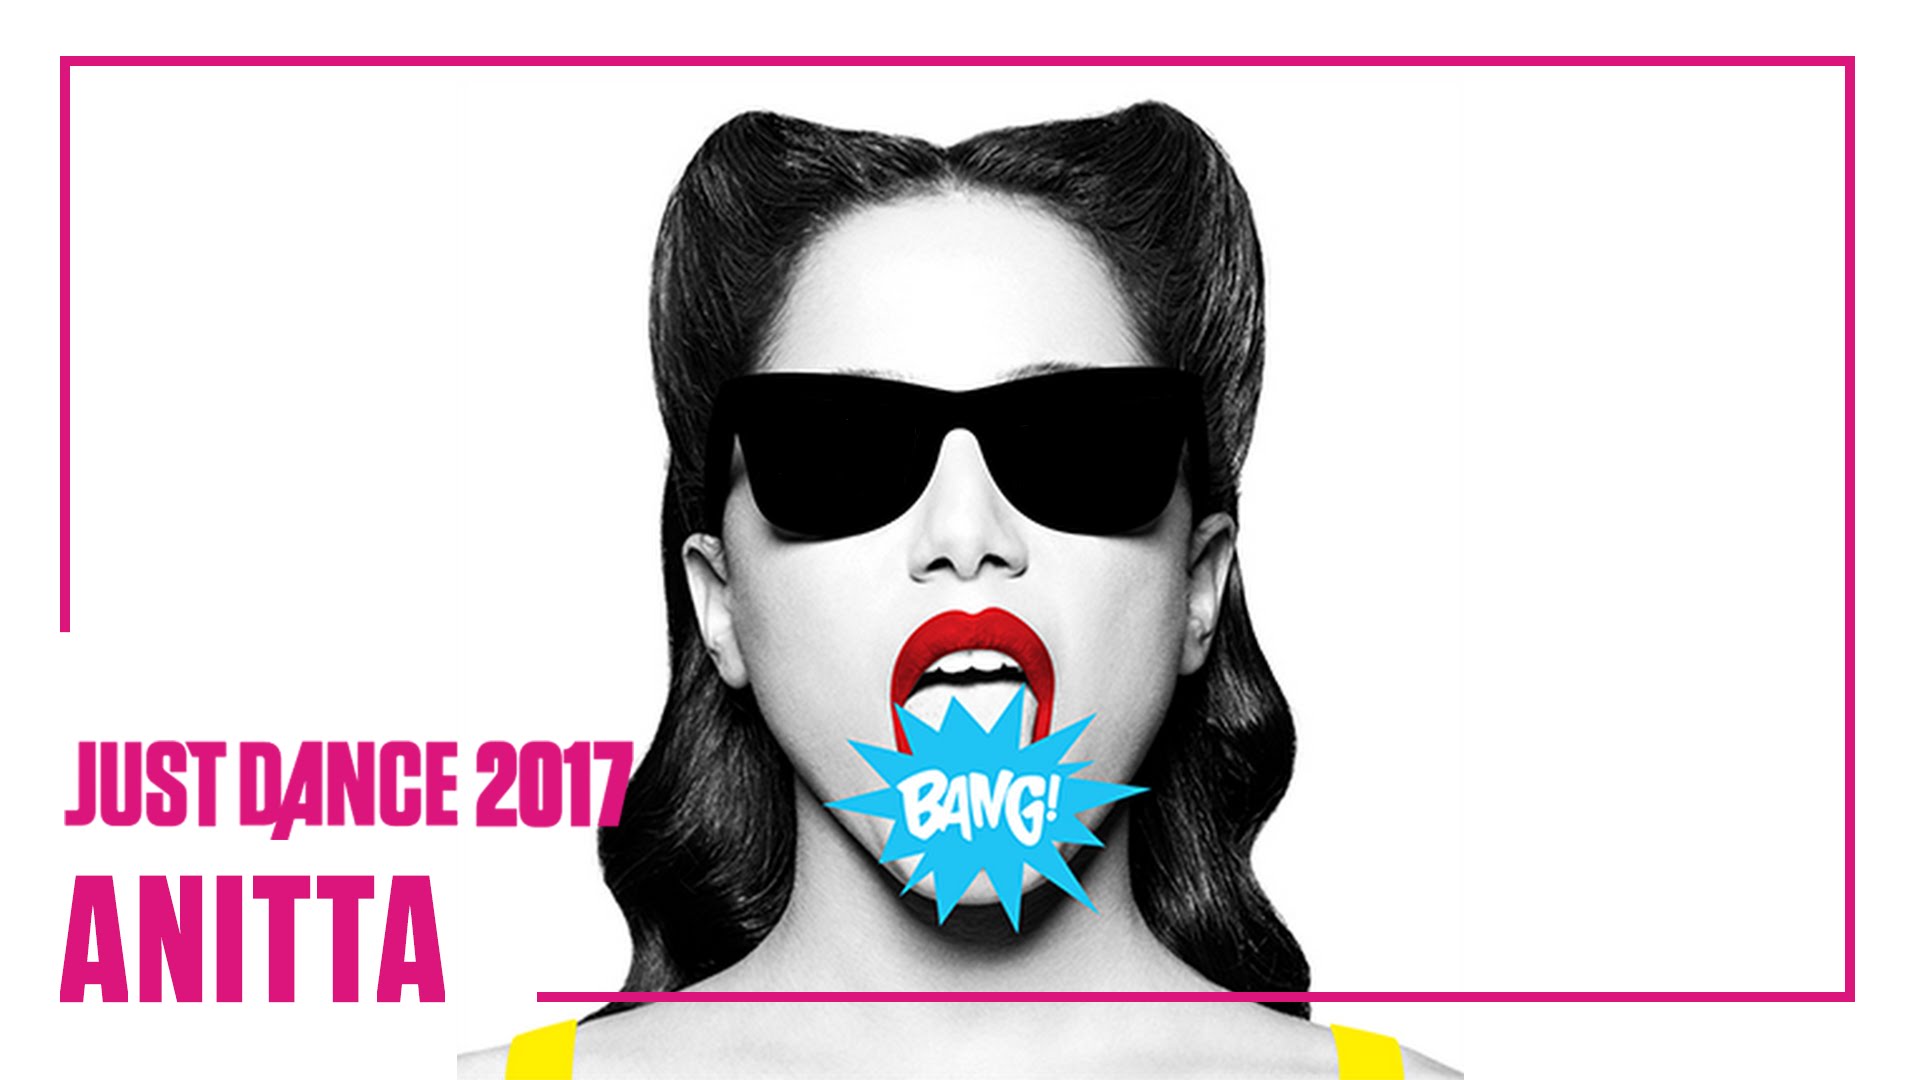 Música: Novo "Just Dance" terá "Bang", de Anitta